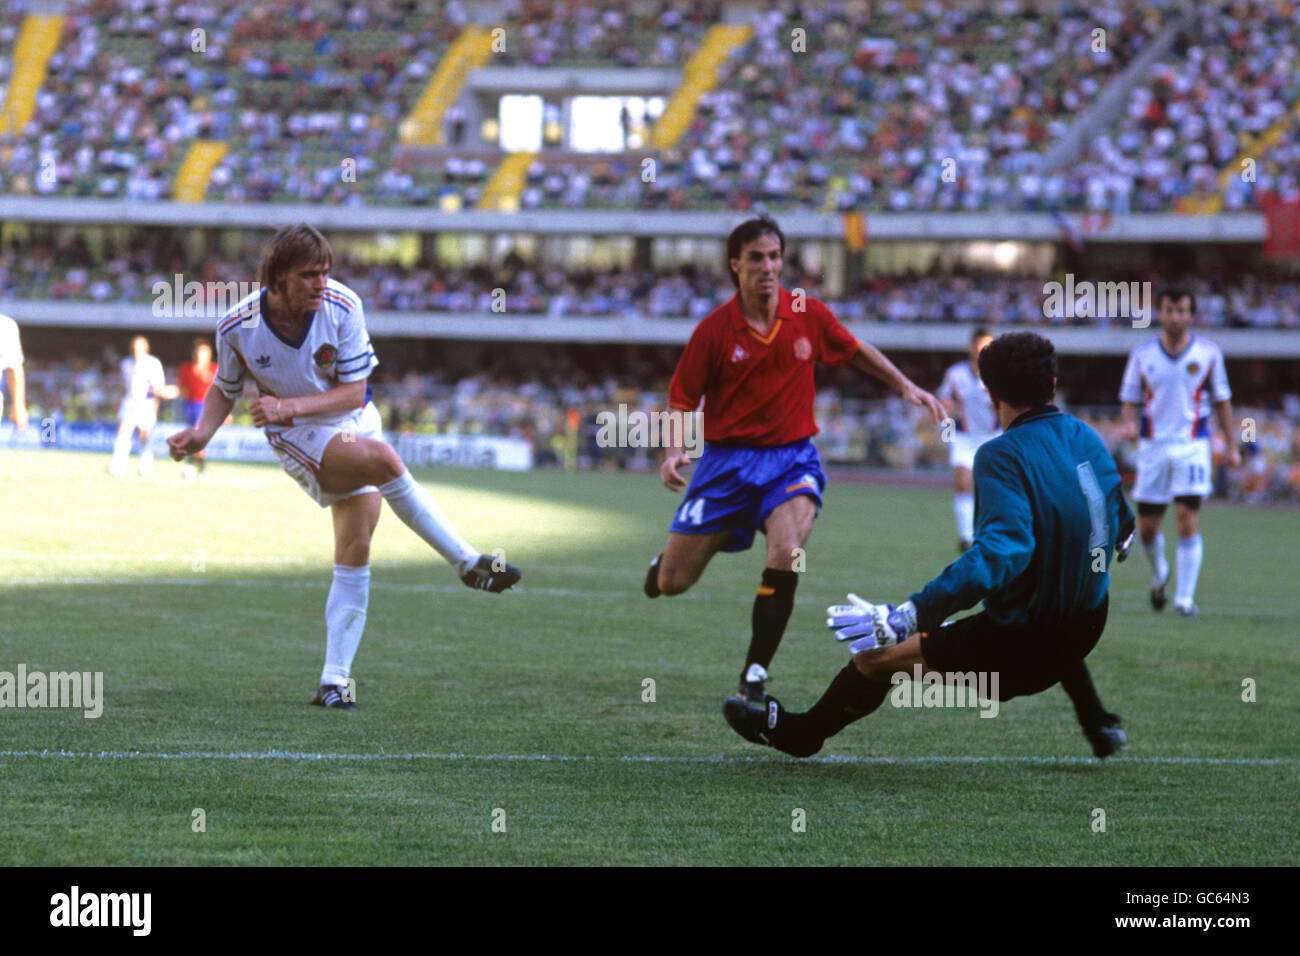 Yugoslavia's Dragan Stojkovic slots the ball past Spain goalkeeper Andoni Zubizarreta to score the opening goal of the game. Spain's Alberto Gorriz (c) can only look on. Stock Photo